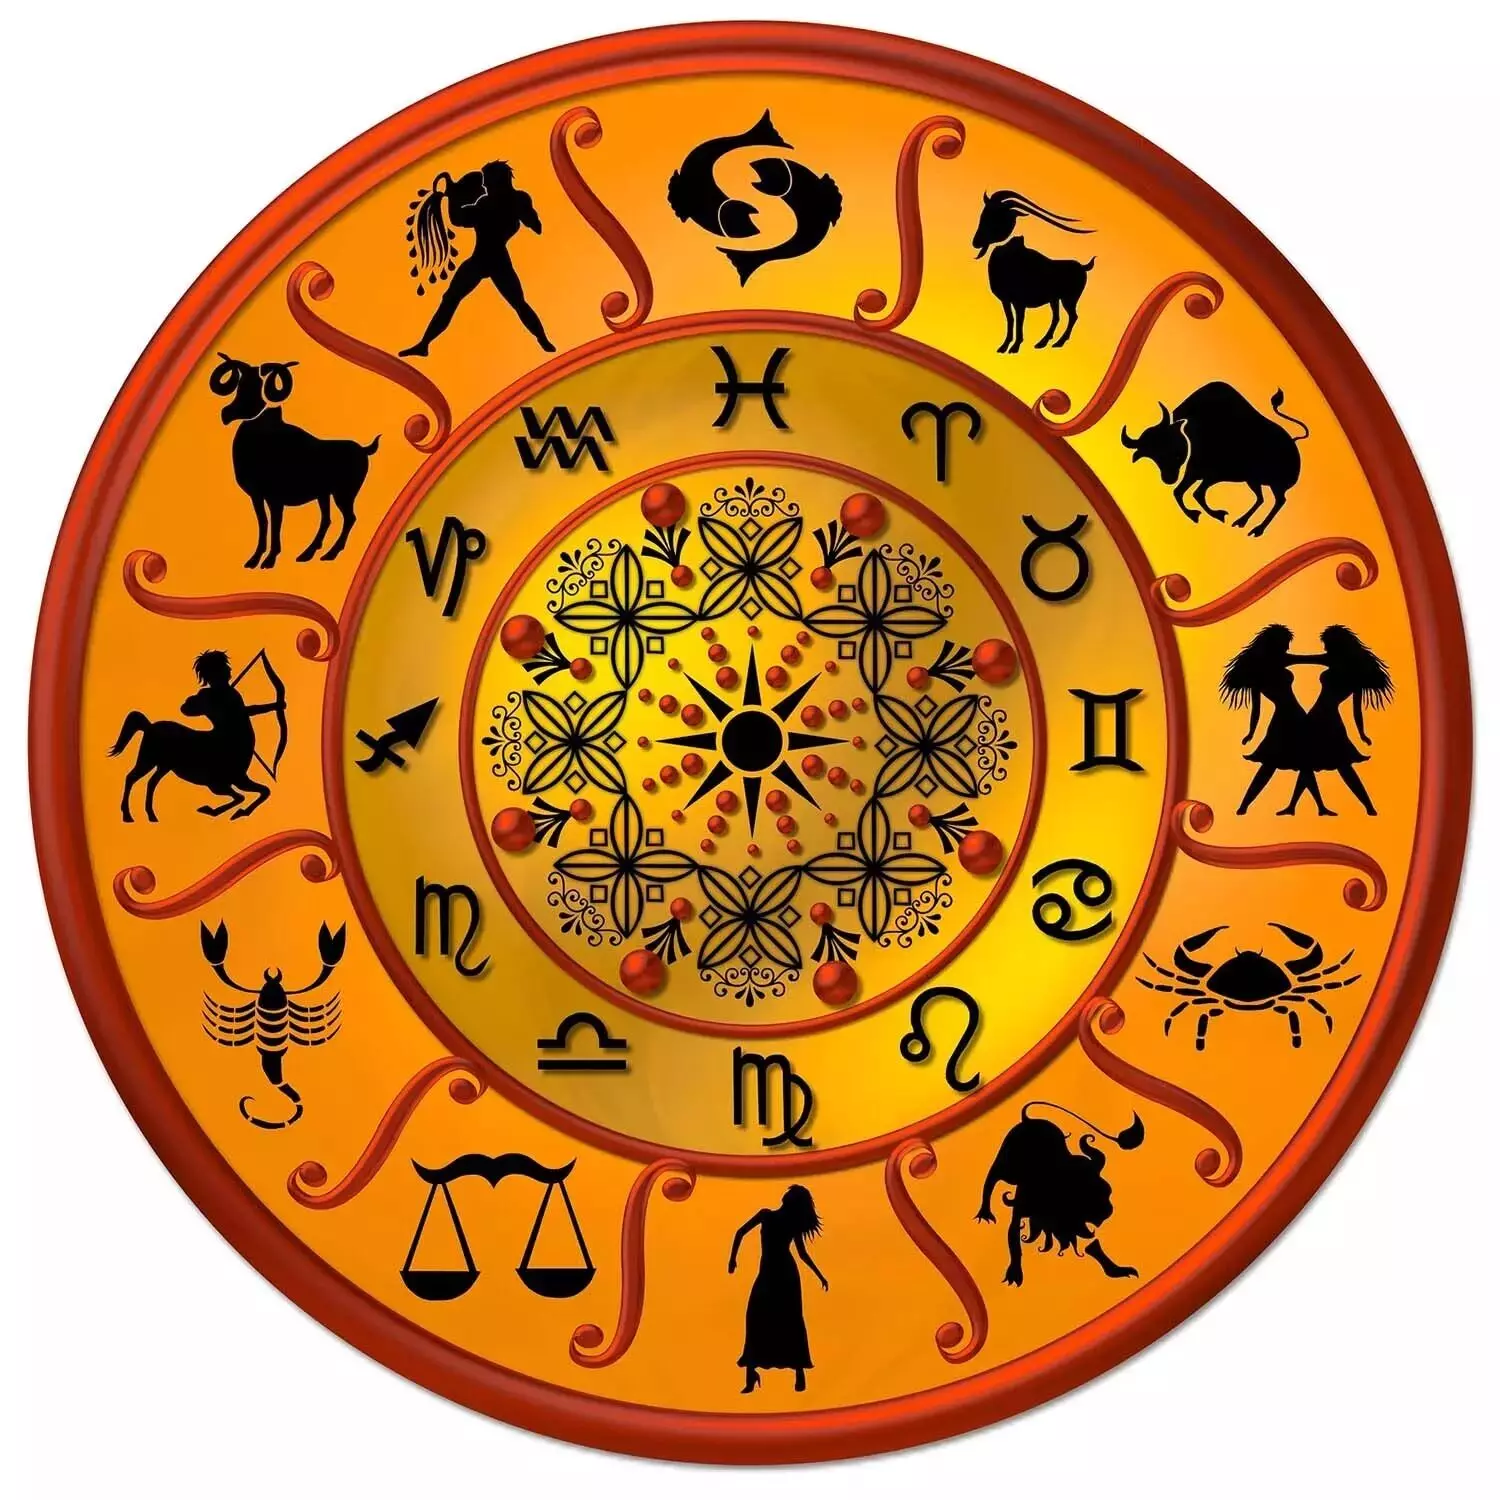 29  Novembar  – Know your todays horoscope